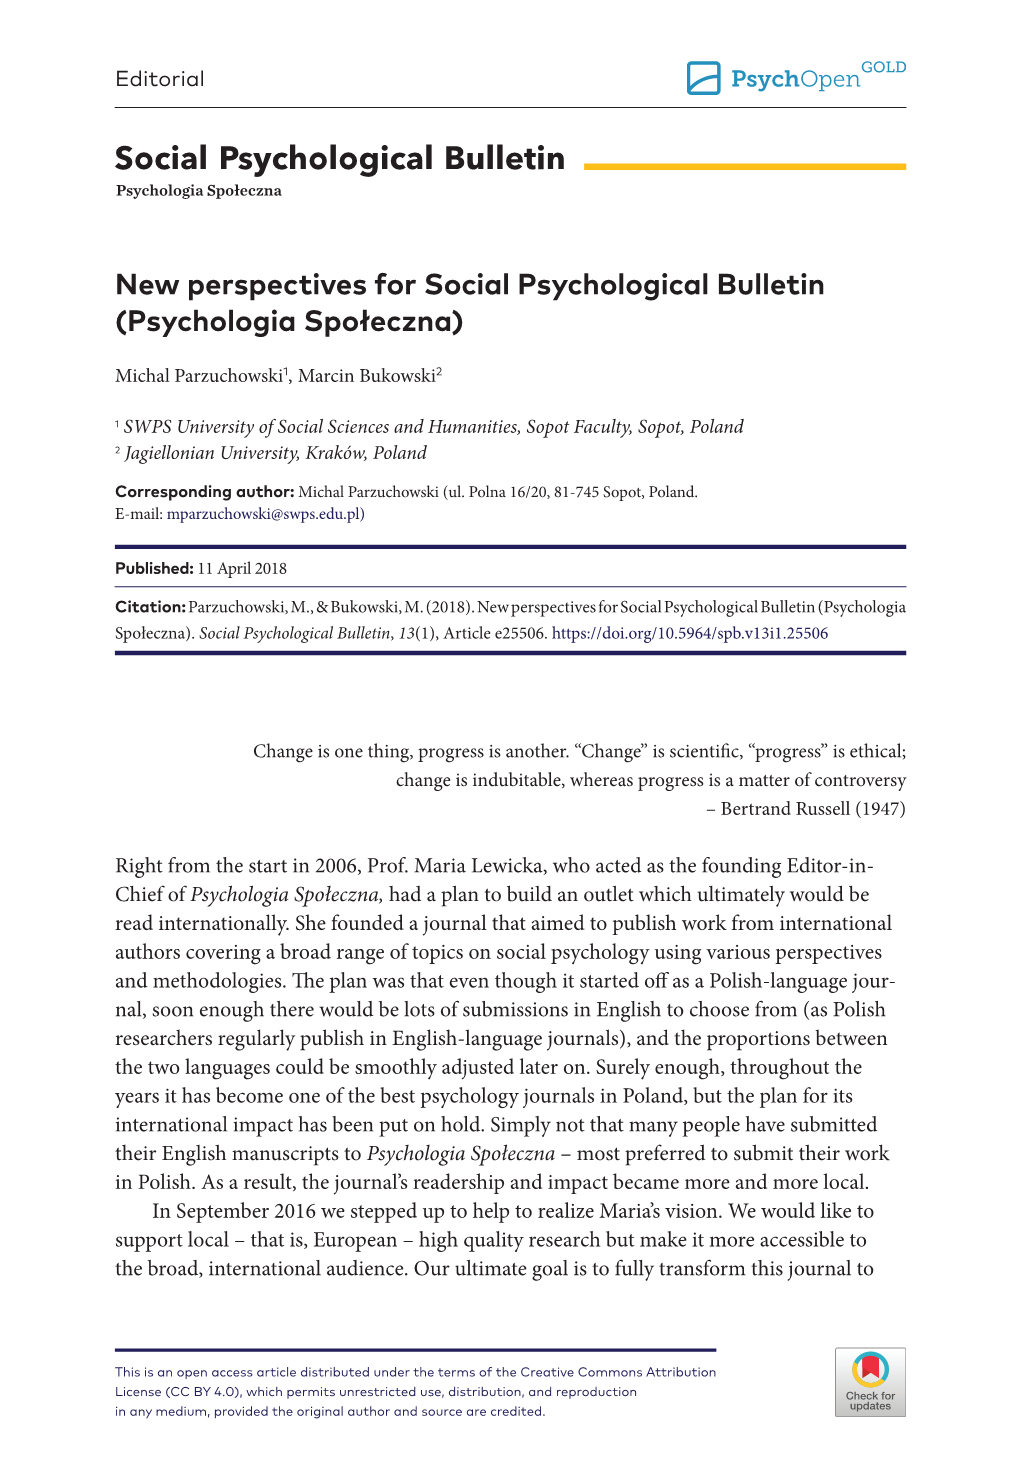 New Perspectives for Social Psychological Bulletin (Psychologia Społeczna)